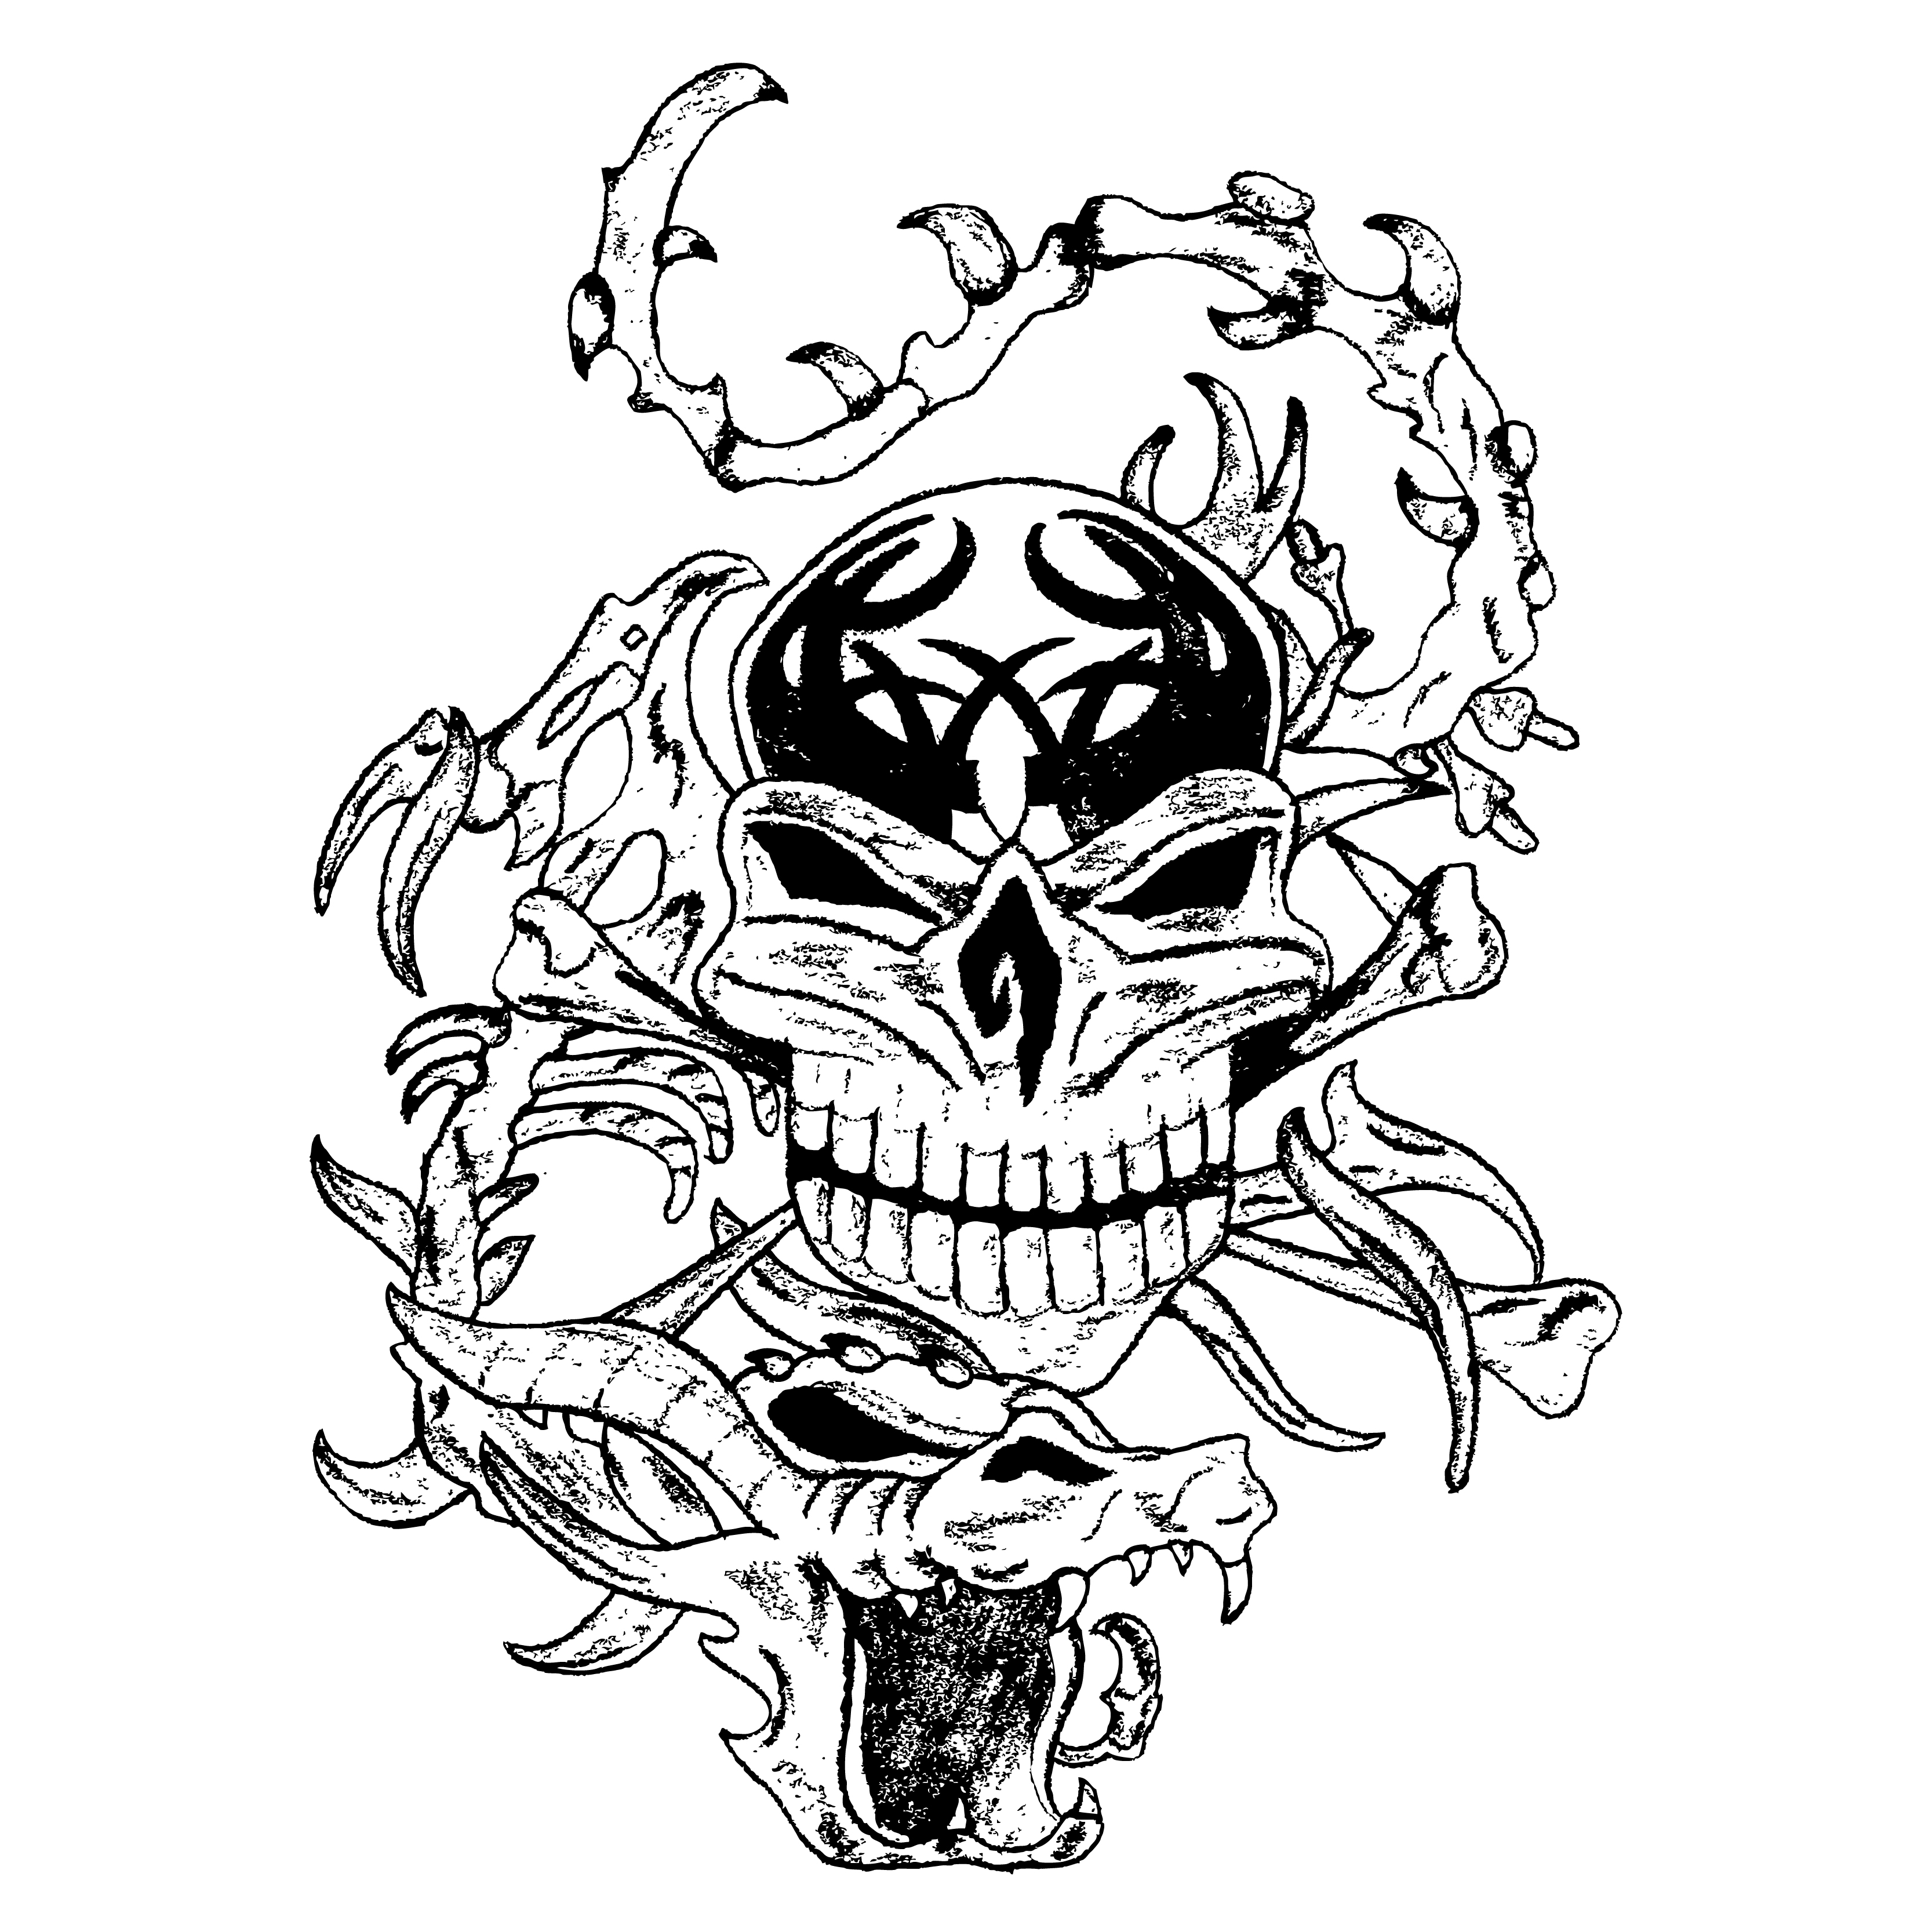 Free Hand Drawn Skull Vector Image